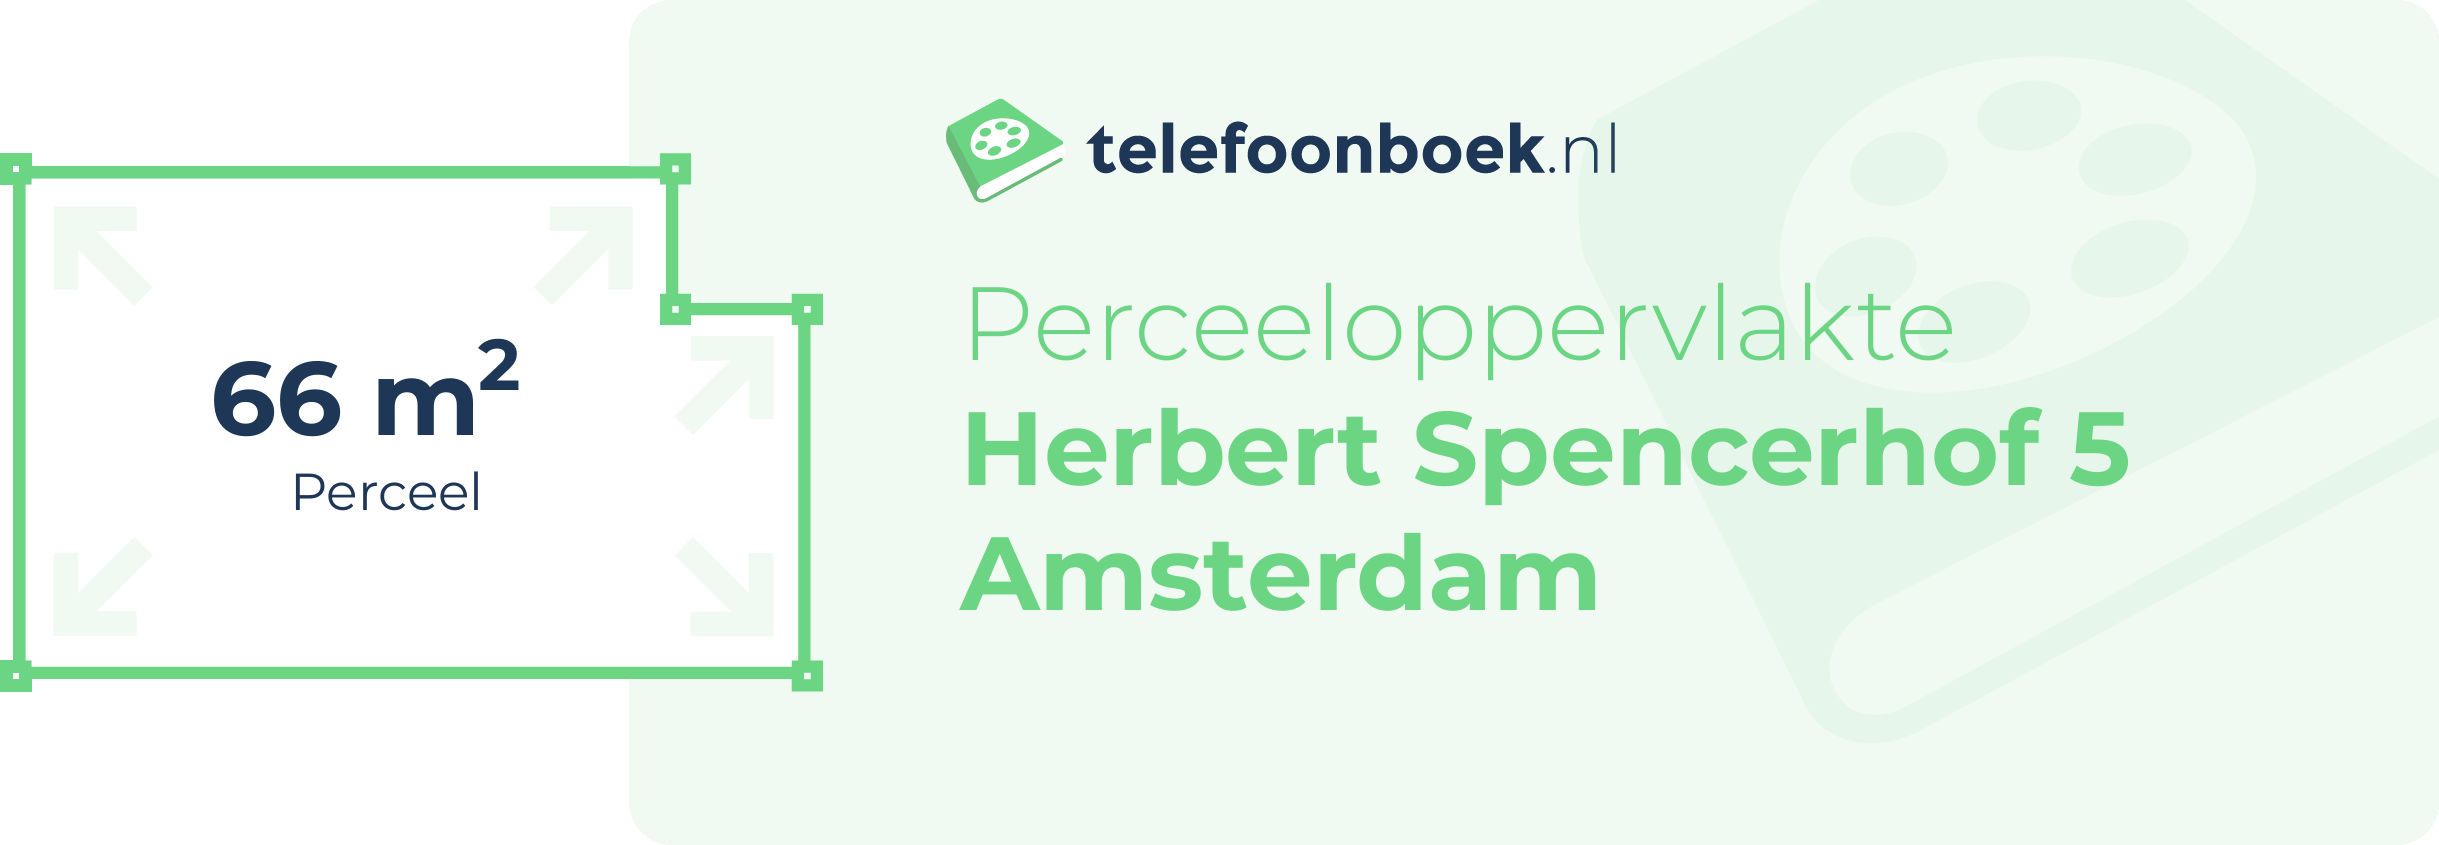 Perceeloppervlakte Herbert Spencerhof 5 Amsterdam